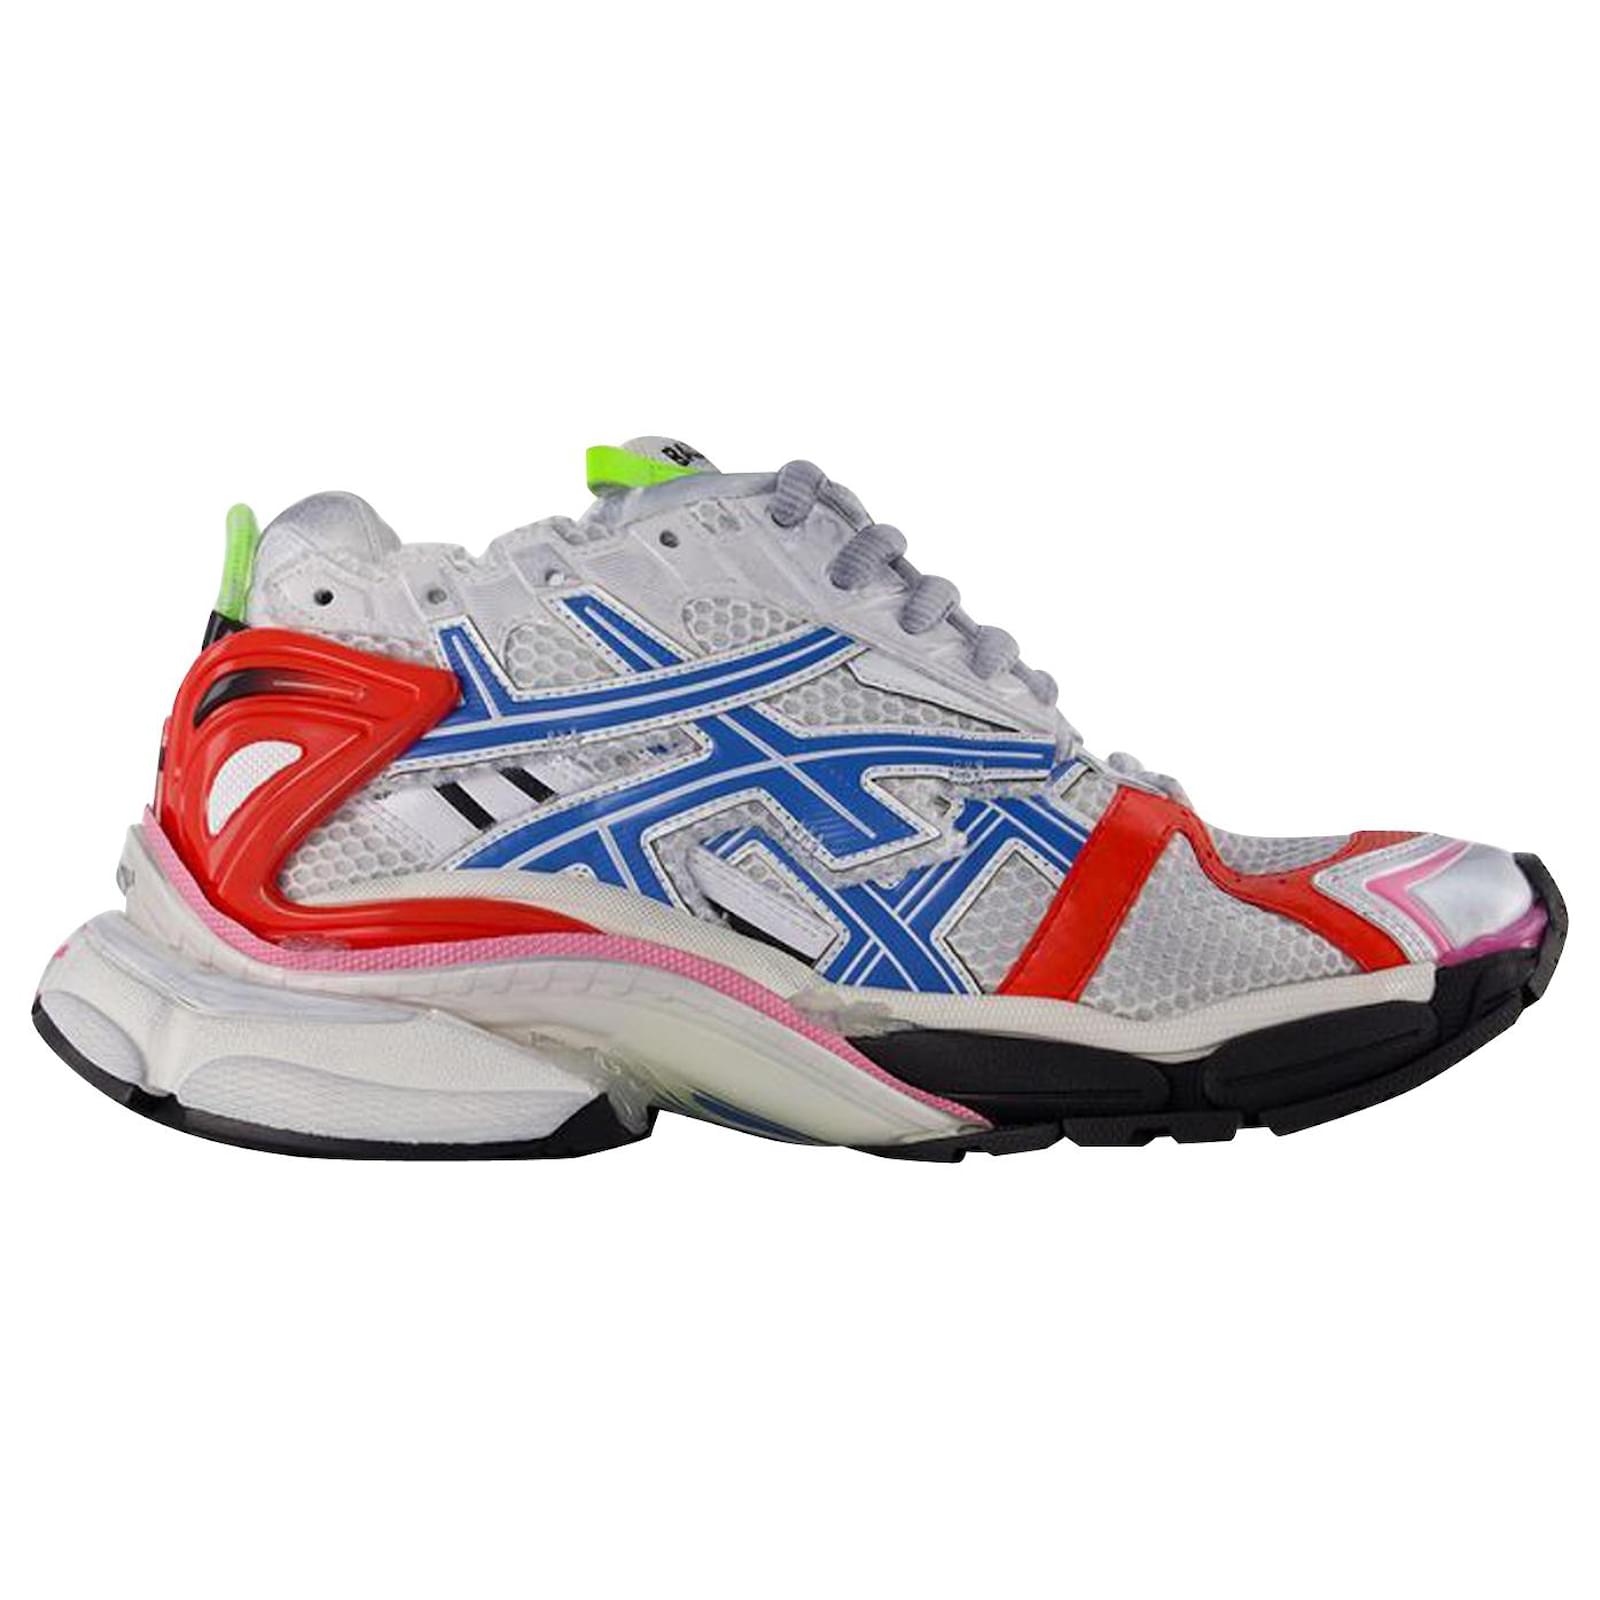 Runner Sneakers - Balenciaga - Mesh - Multi Multiple colors ref.962504 ...